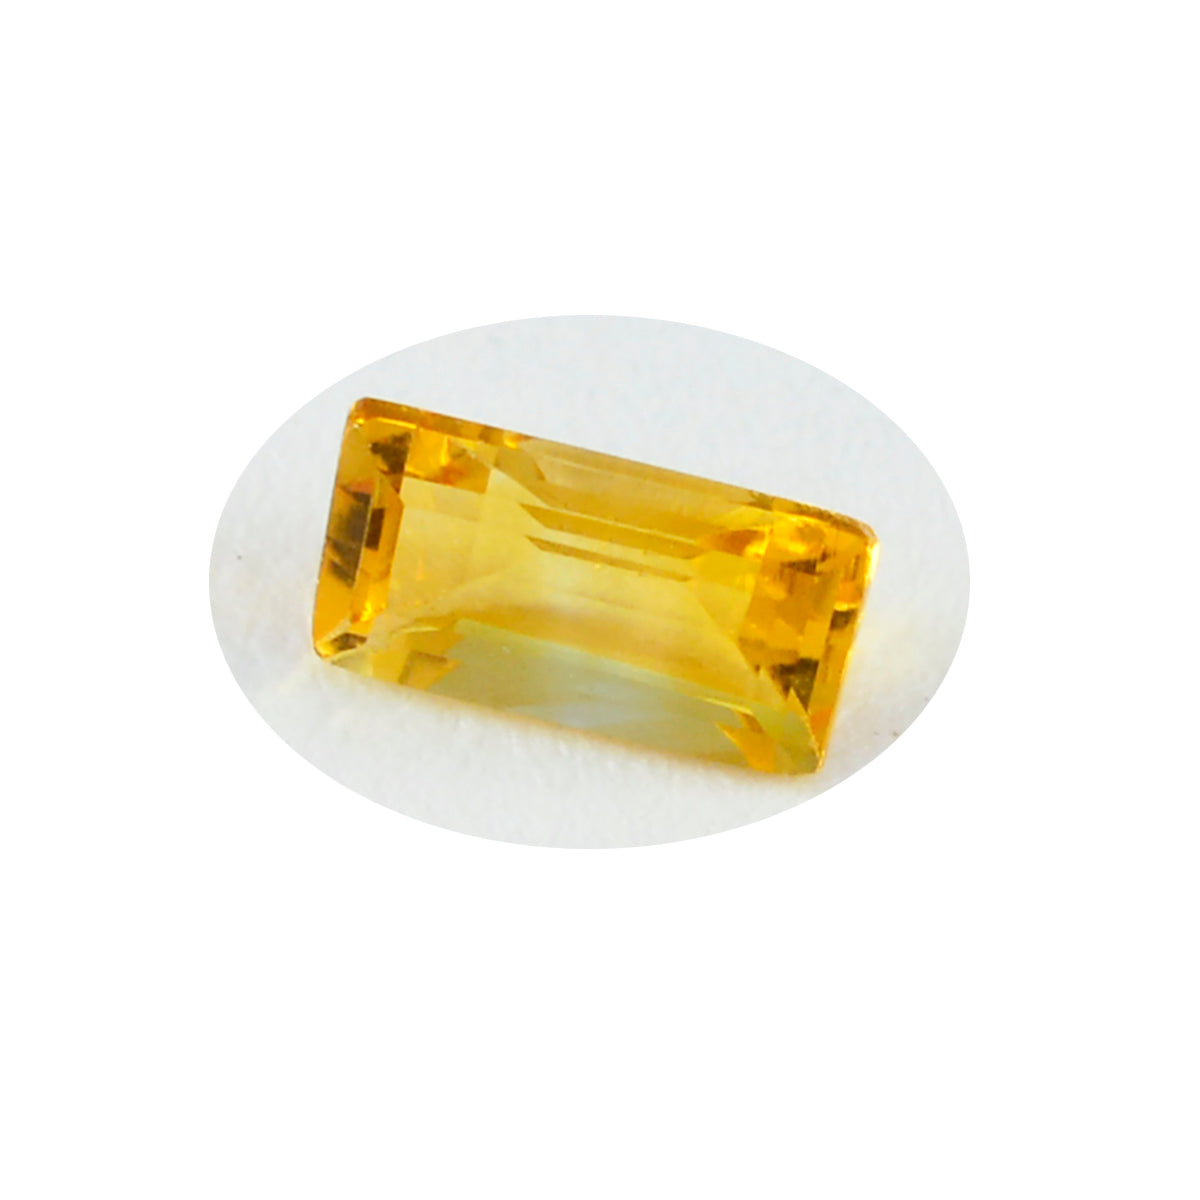 riyogems 1pc リアル イエロー シトリン ファセット 5x10 mm バゲット形状、素晴らしい品質のルース宝石